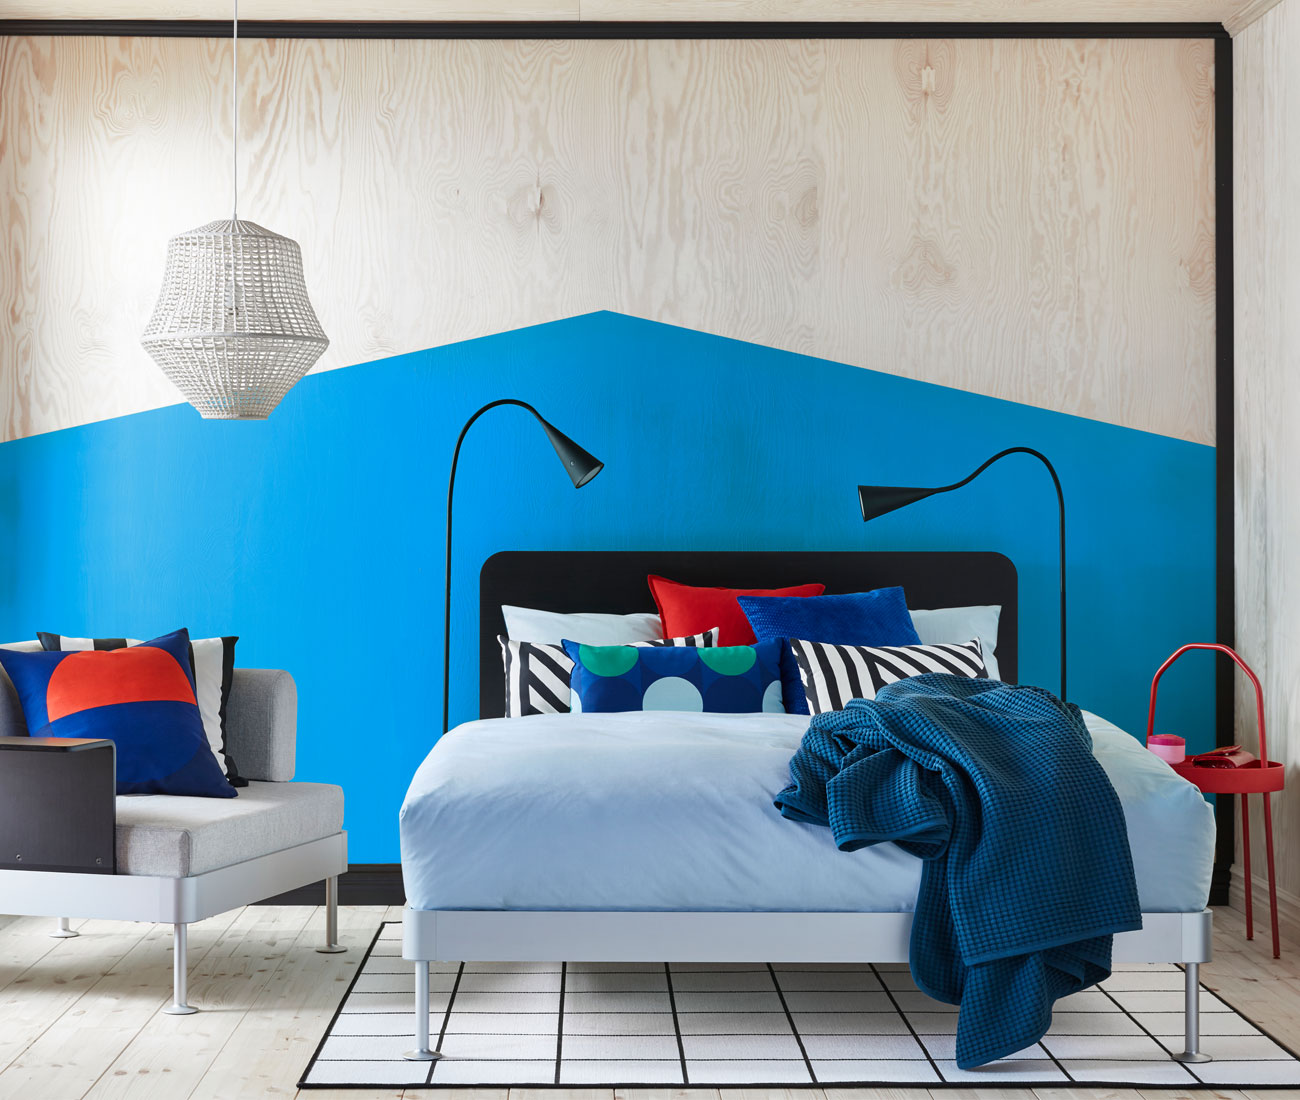 Tom Dixon Ikea Delaktig Bed Toronto Canada Designlines Magazine